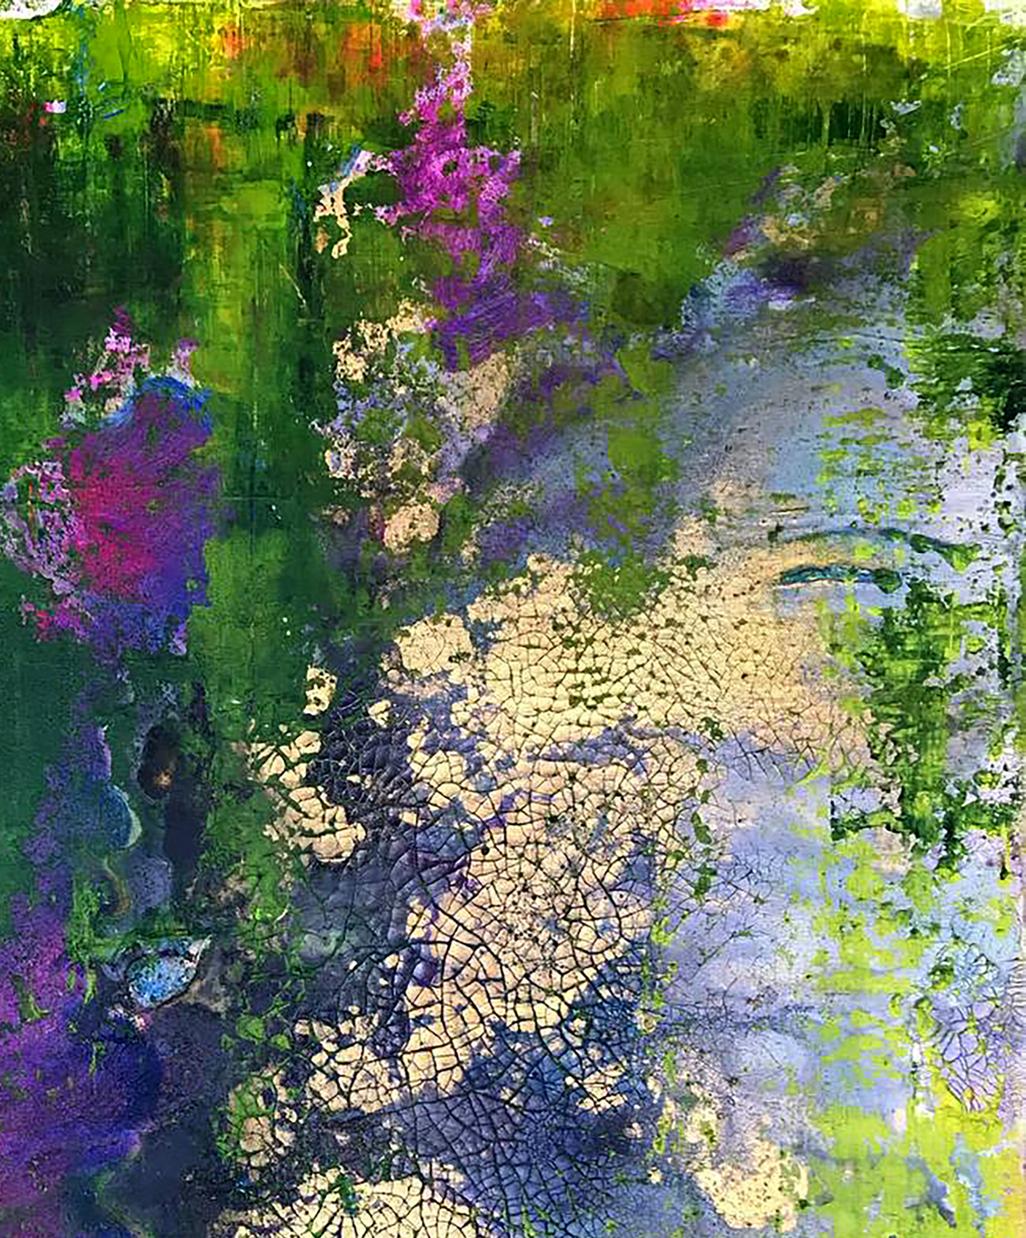 Olga Melezhik's acrylic painting portrays a garden filled with lilacs